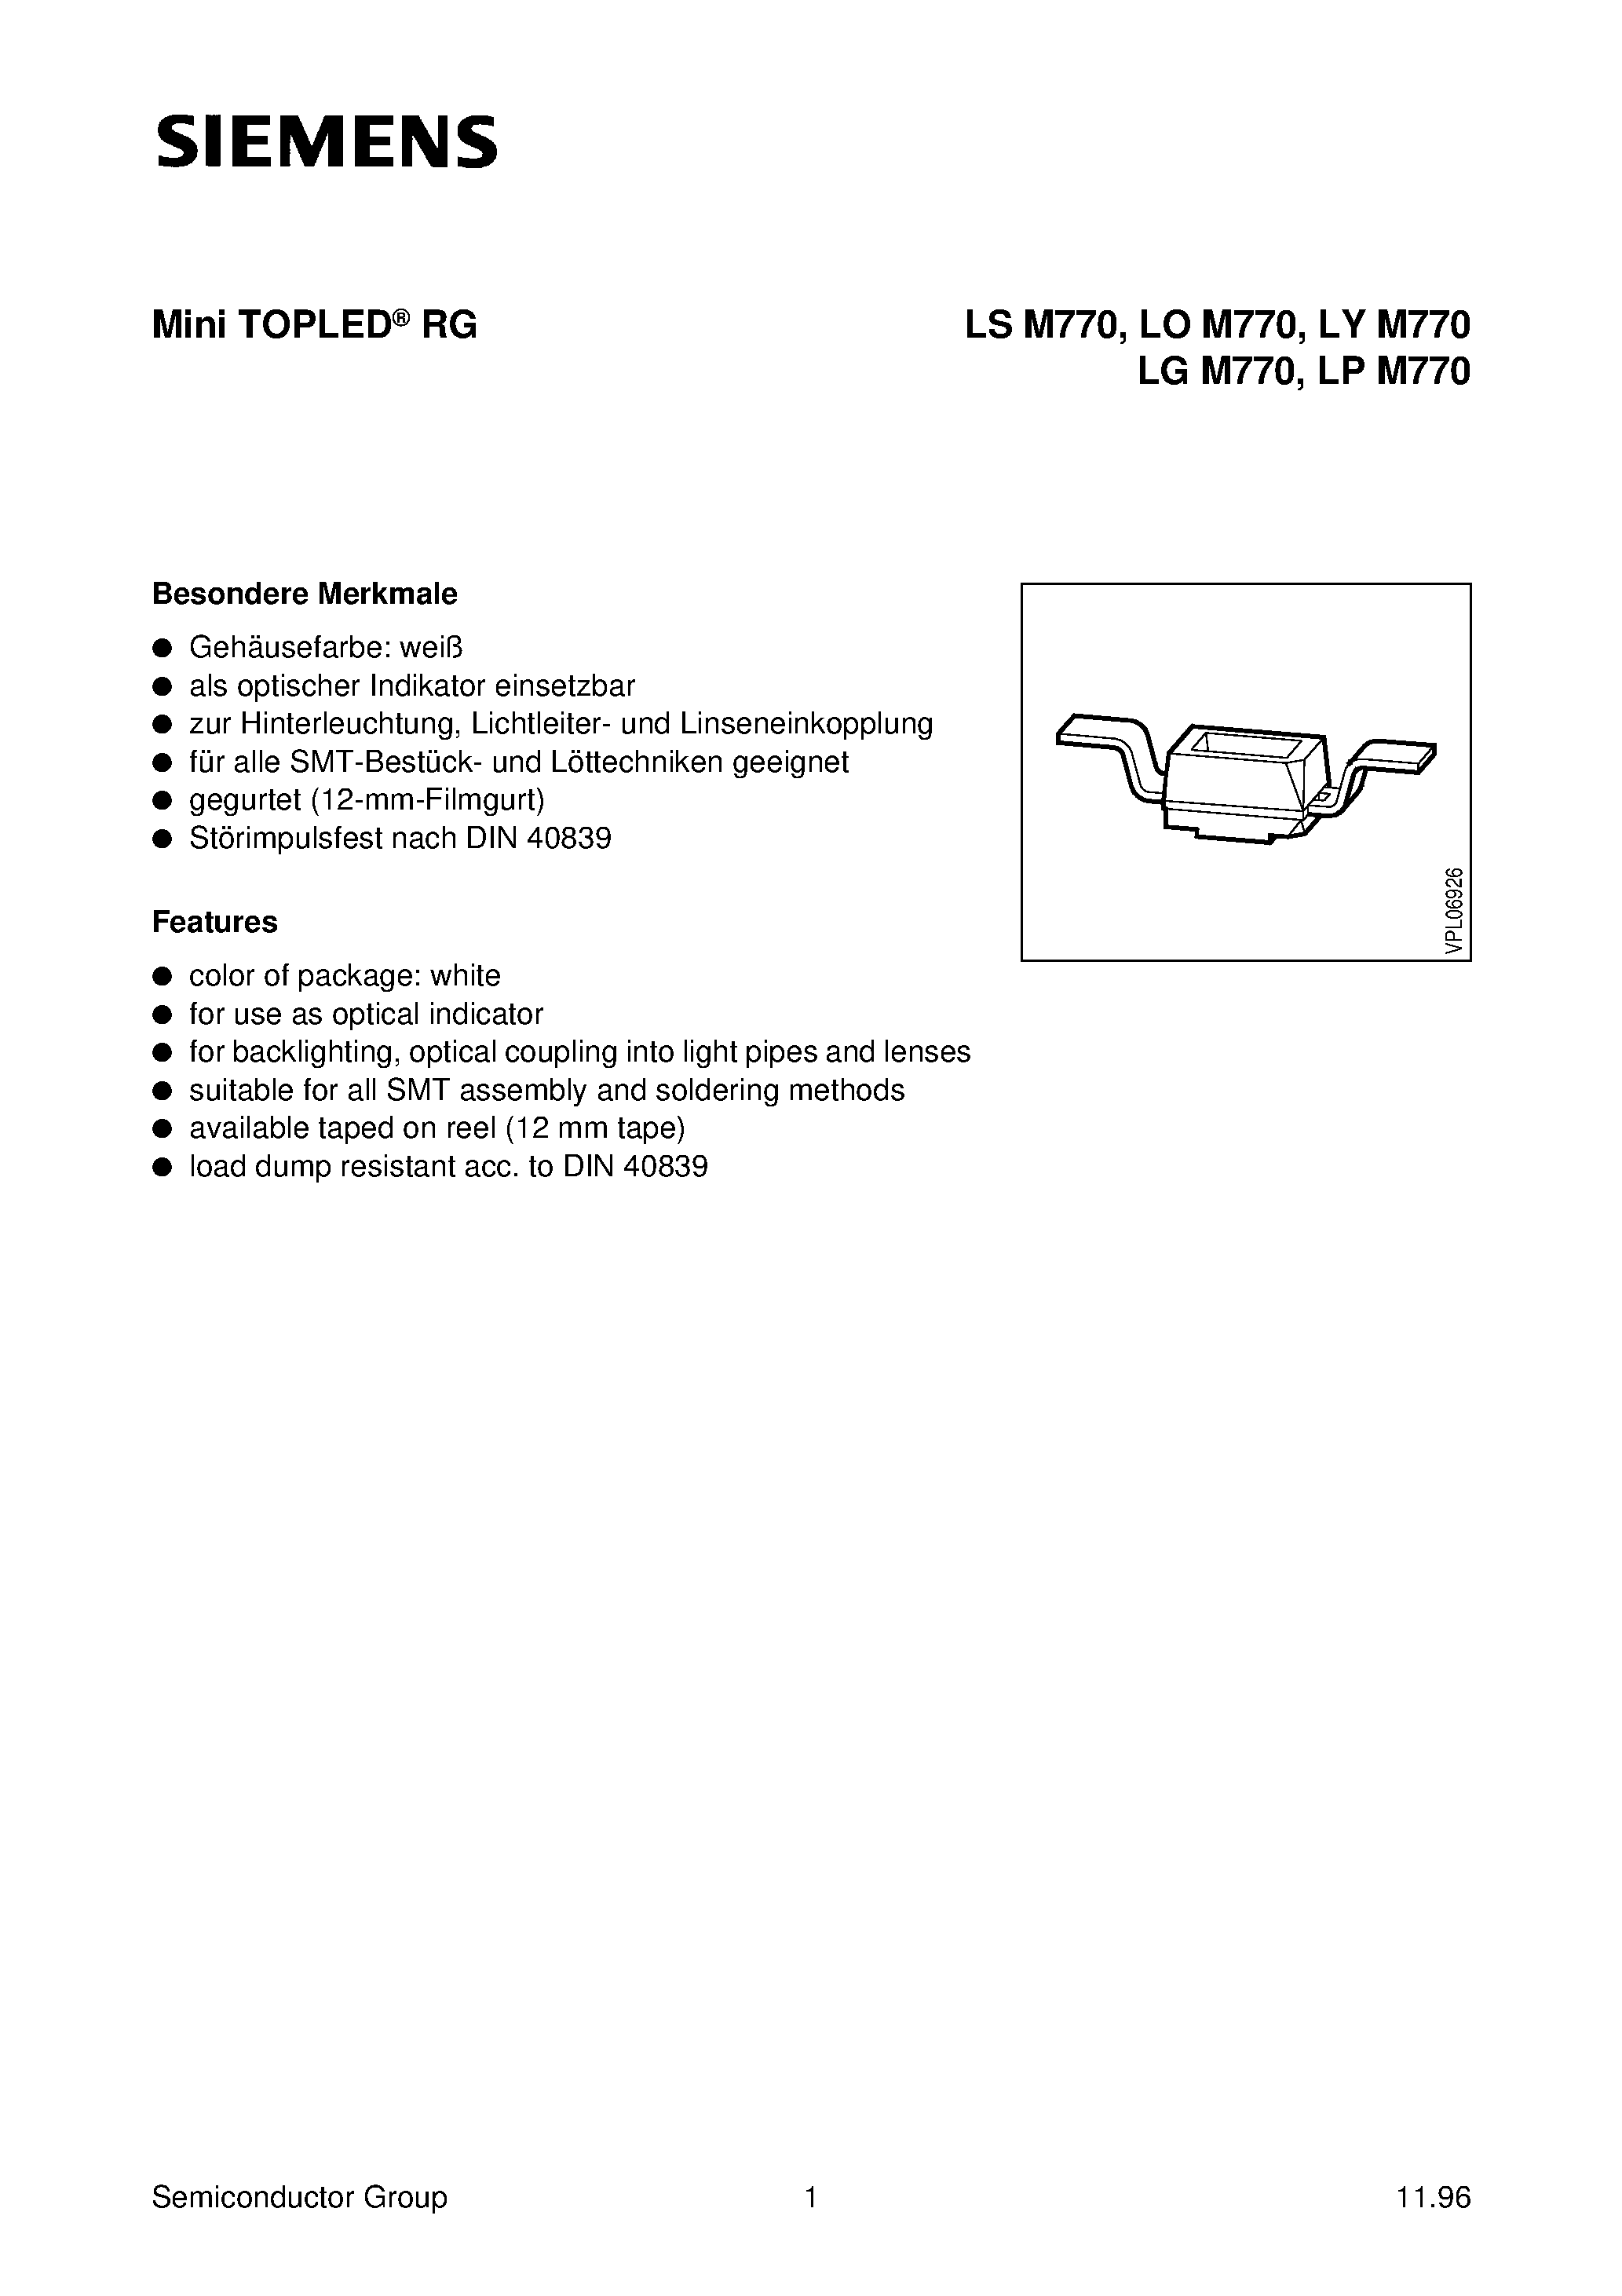 Datasheet LYM770-K - Mini TOPLED RG page 1